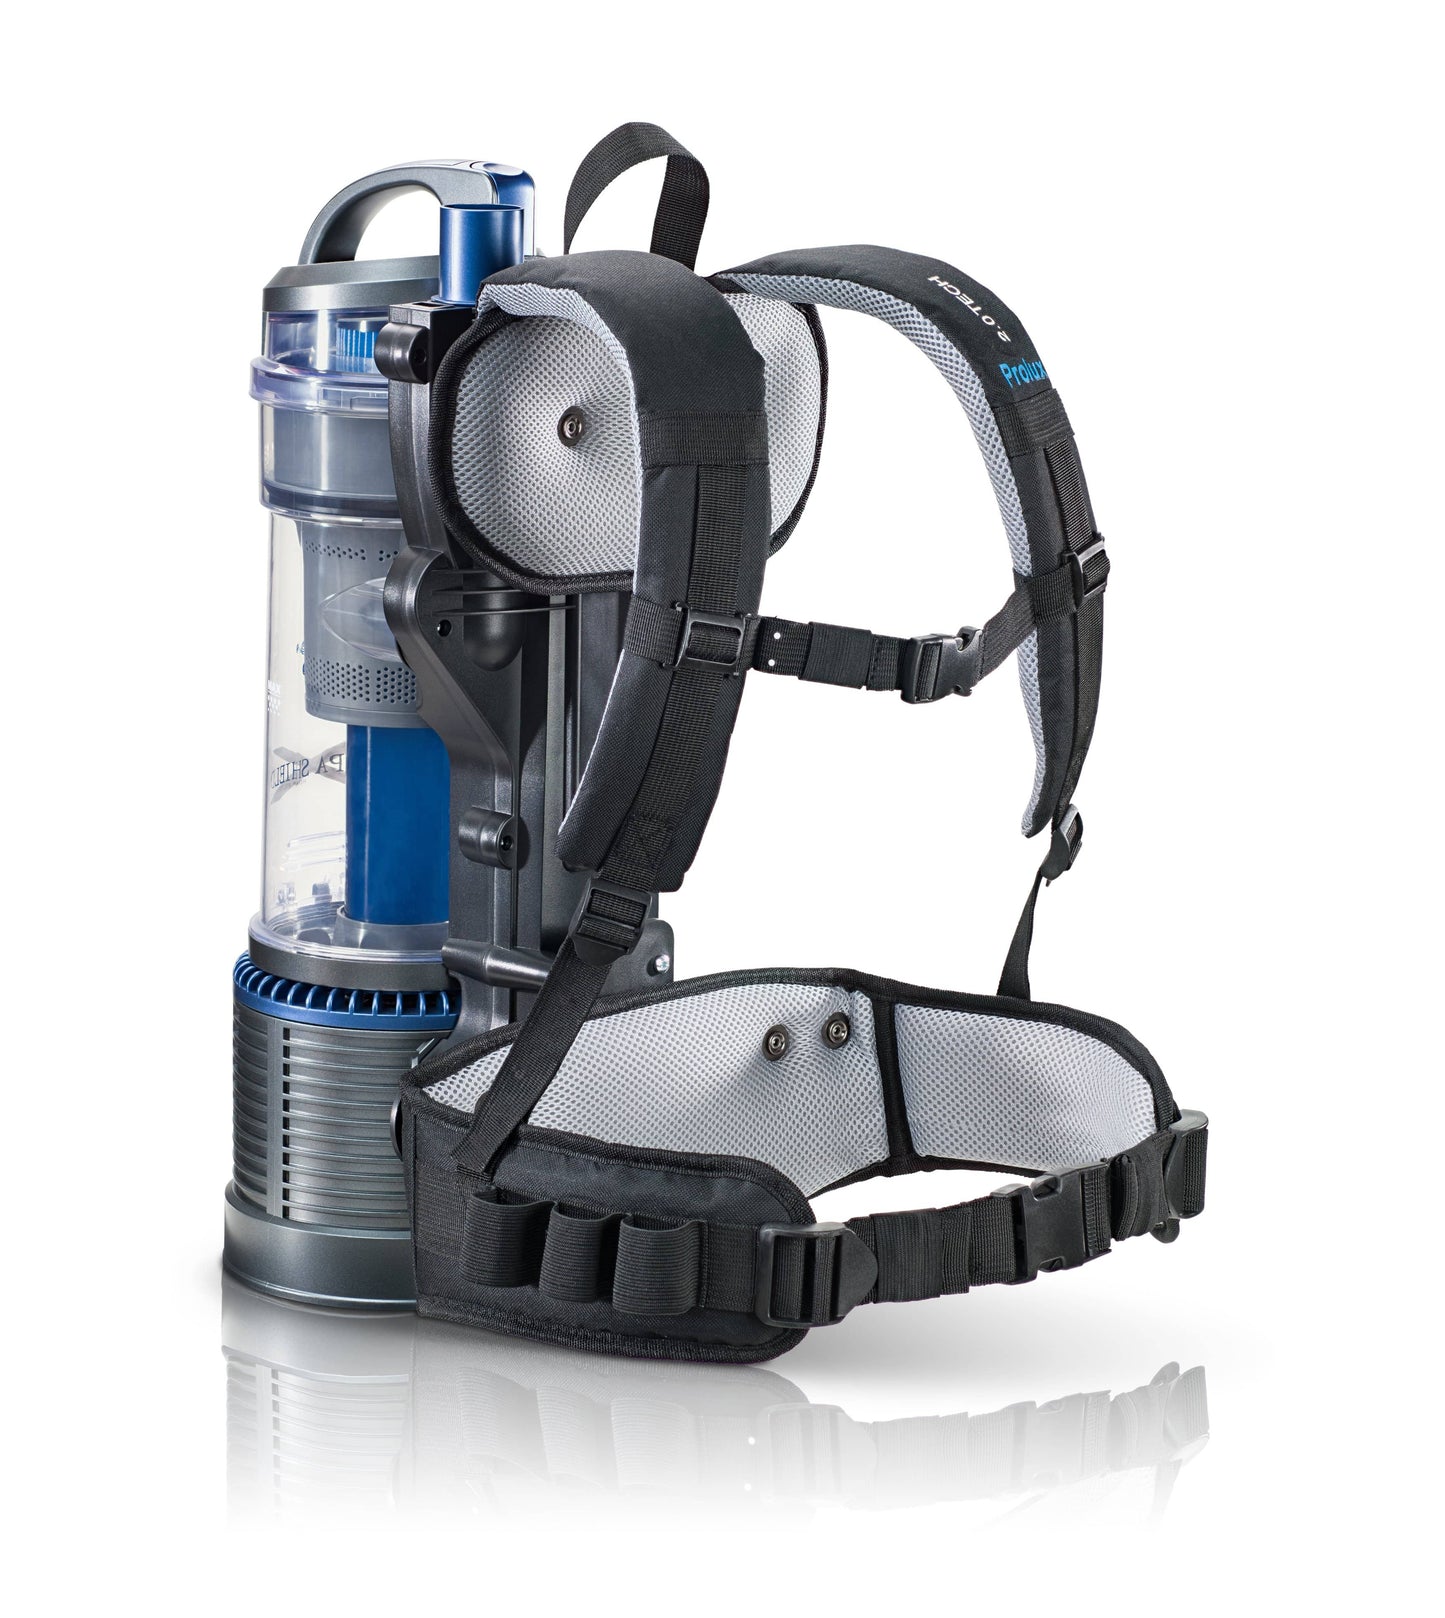 Demo Lightweight Prolux 2.0 Bagless Backpack Vacuum w/ 5 YR Warranty